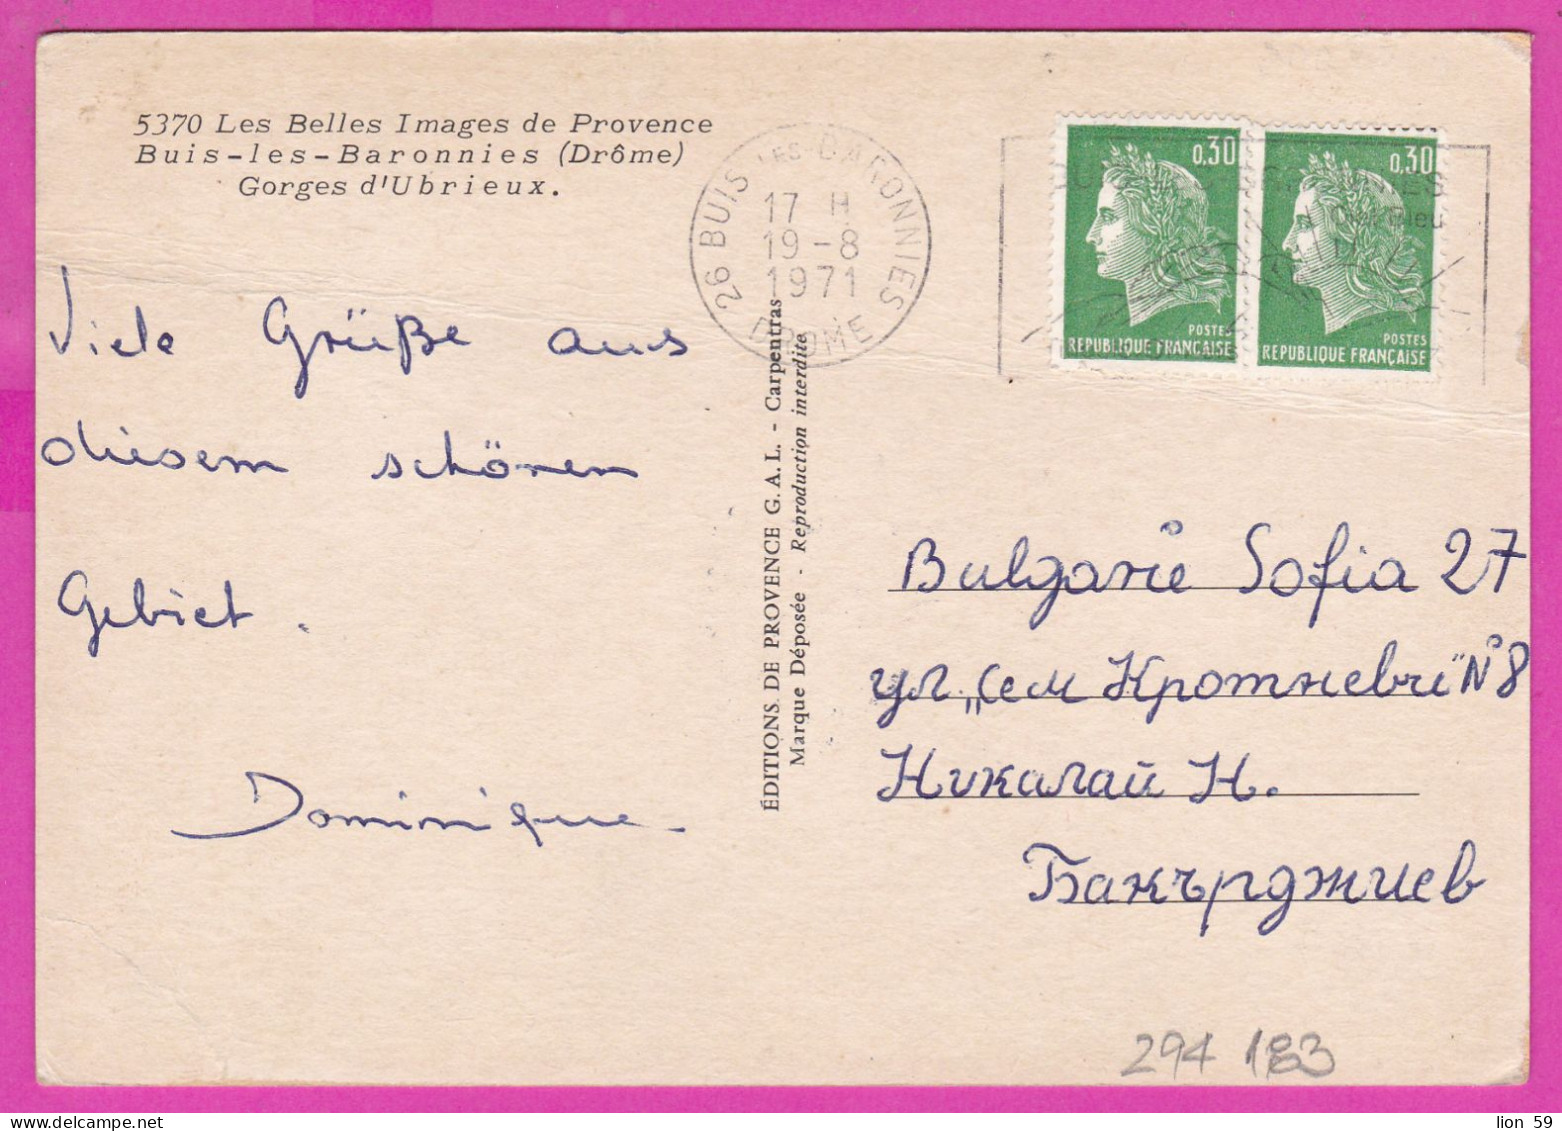 294183 / France - Buis-Les-Baronnies (Drome) Gorges D'Ubrieux PC 1971 USED 0.30+0.30 Fr. Marianne De Cheffer Flamme - 1967-1970 Marianne Van Cheffer